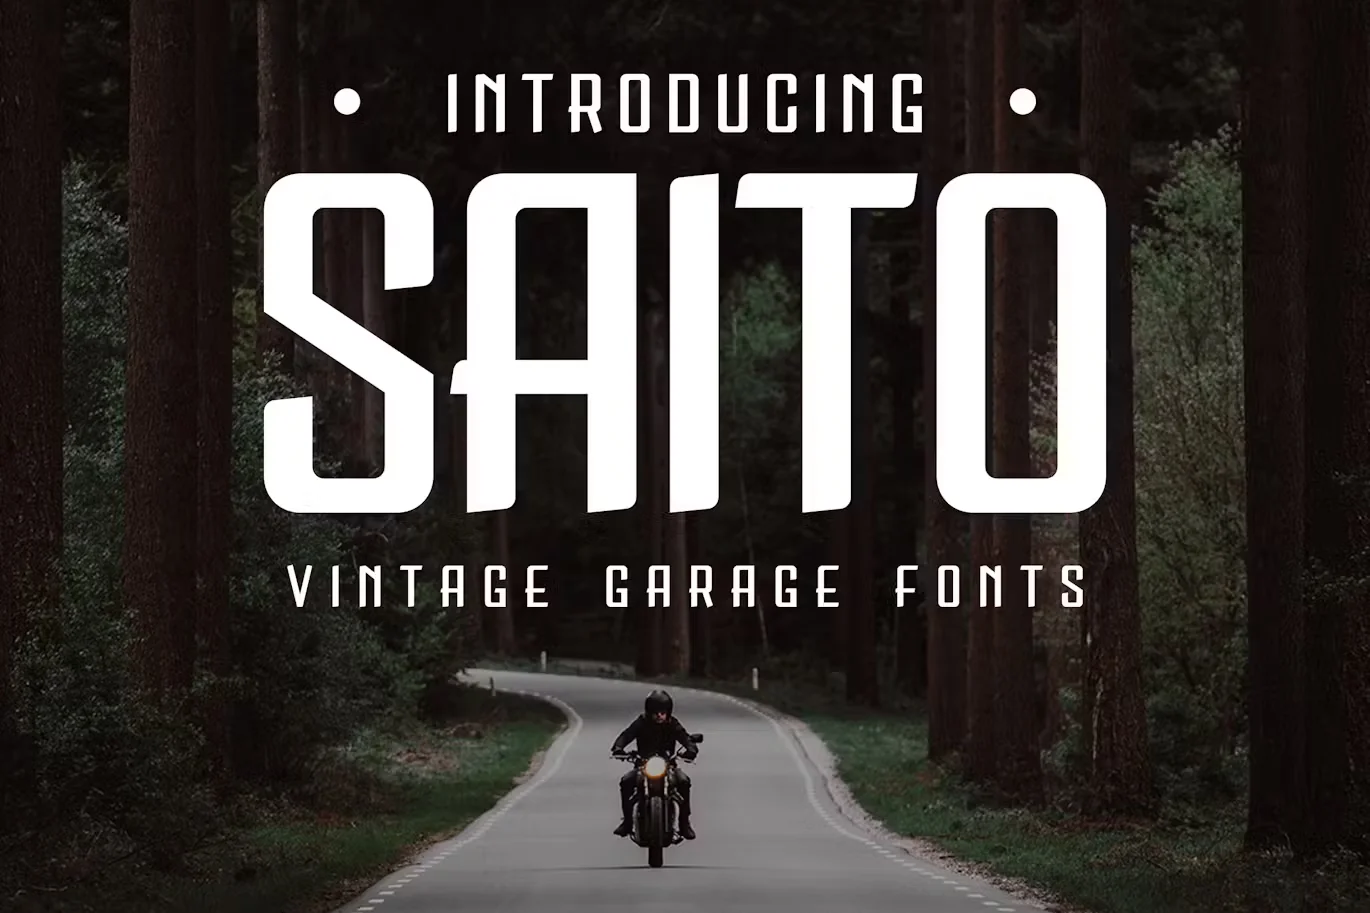 Saito - Vintage Garage Fonts